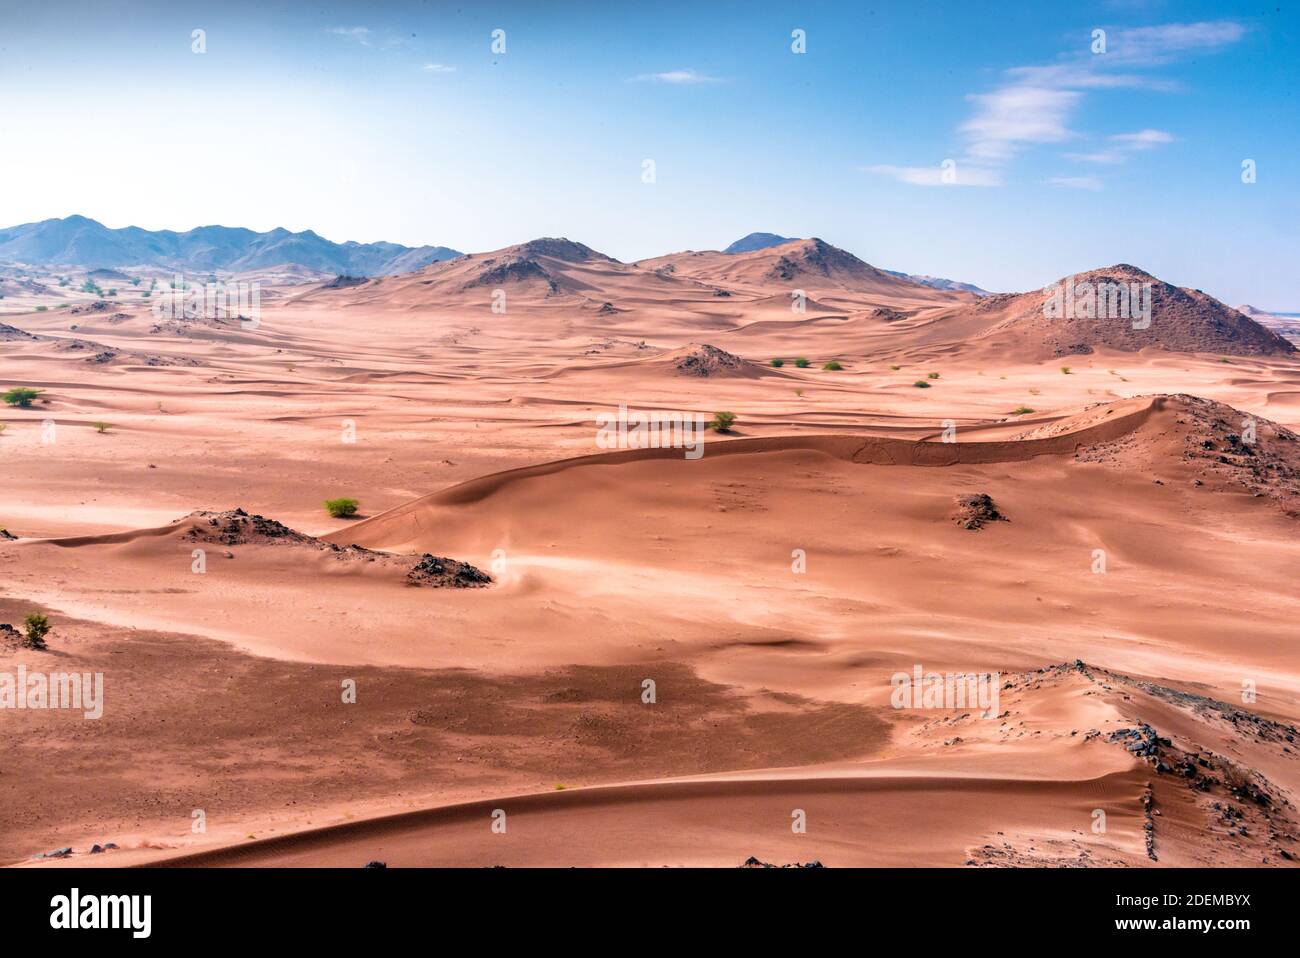 Desert view of Jeddah, Saudi Arabia Stock Photo